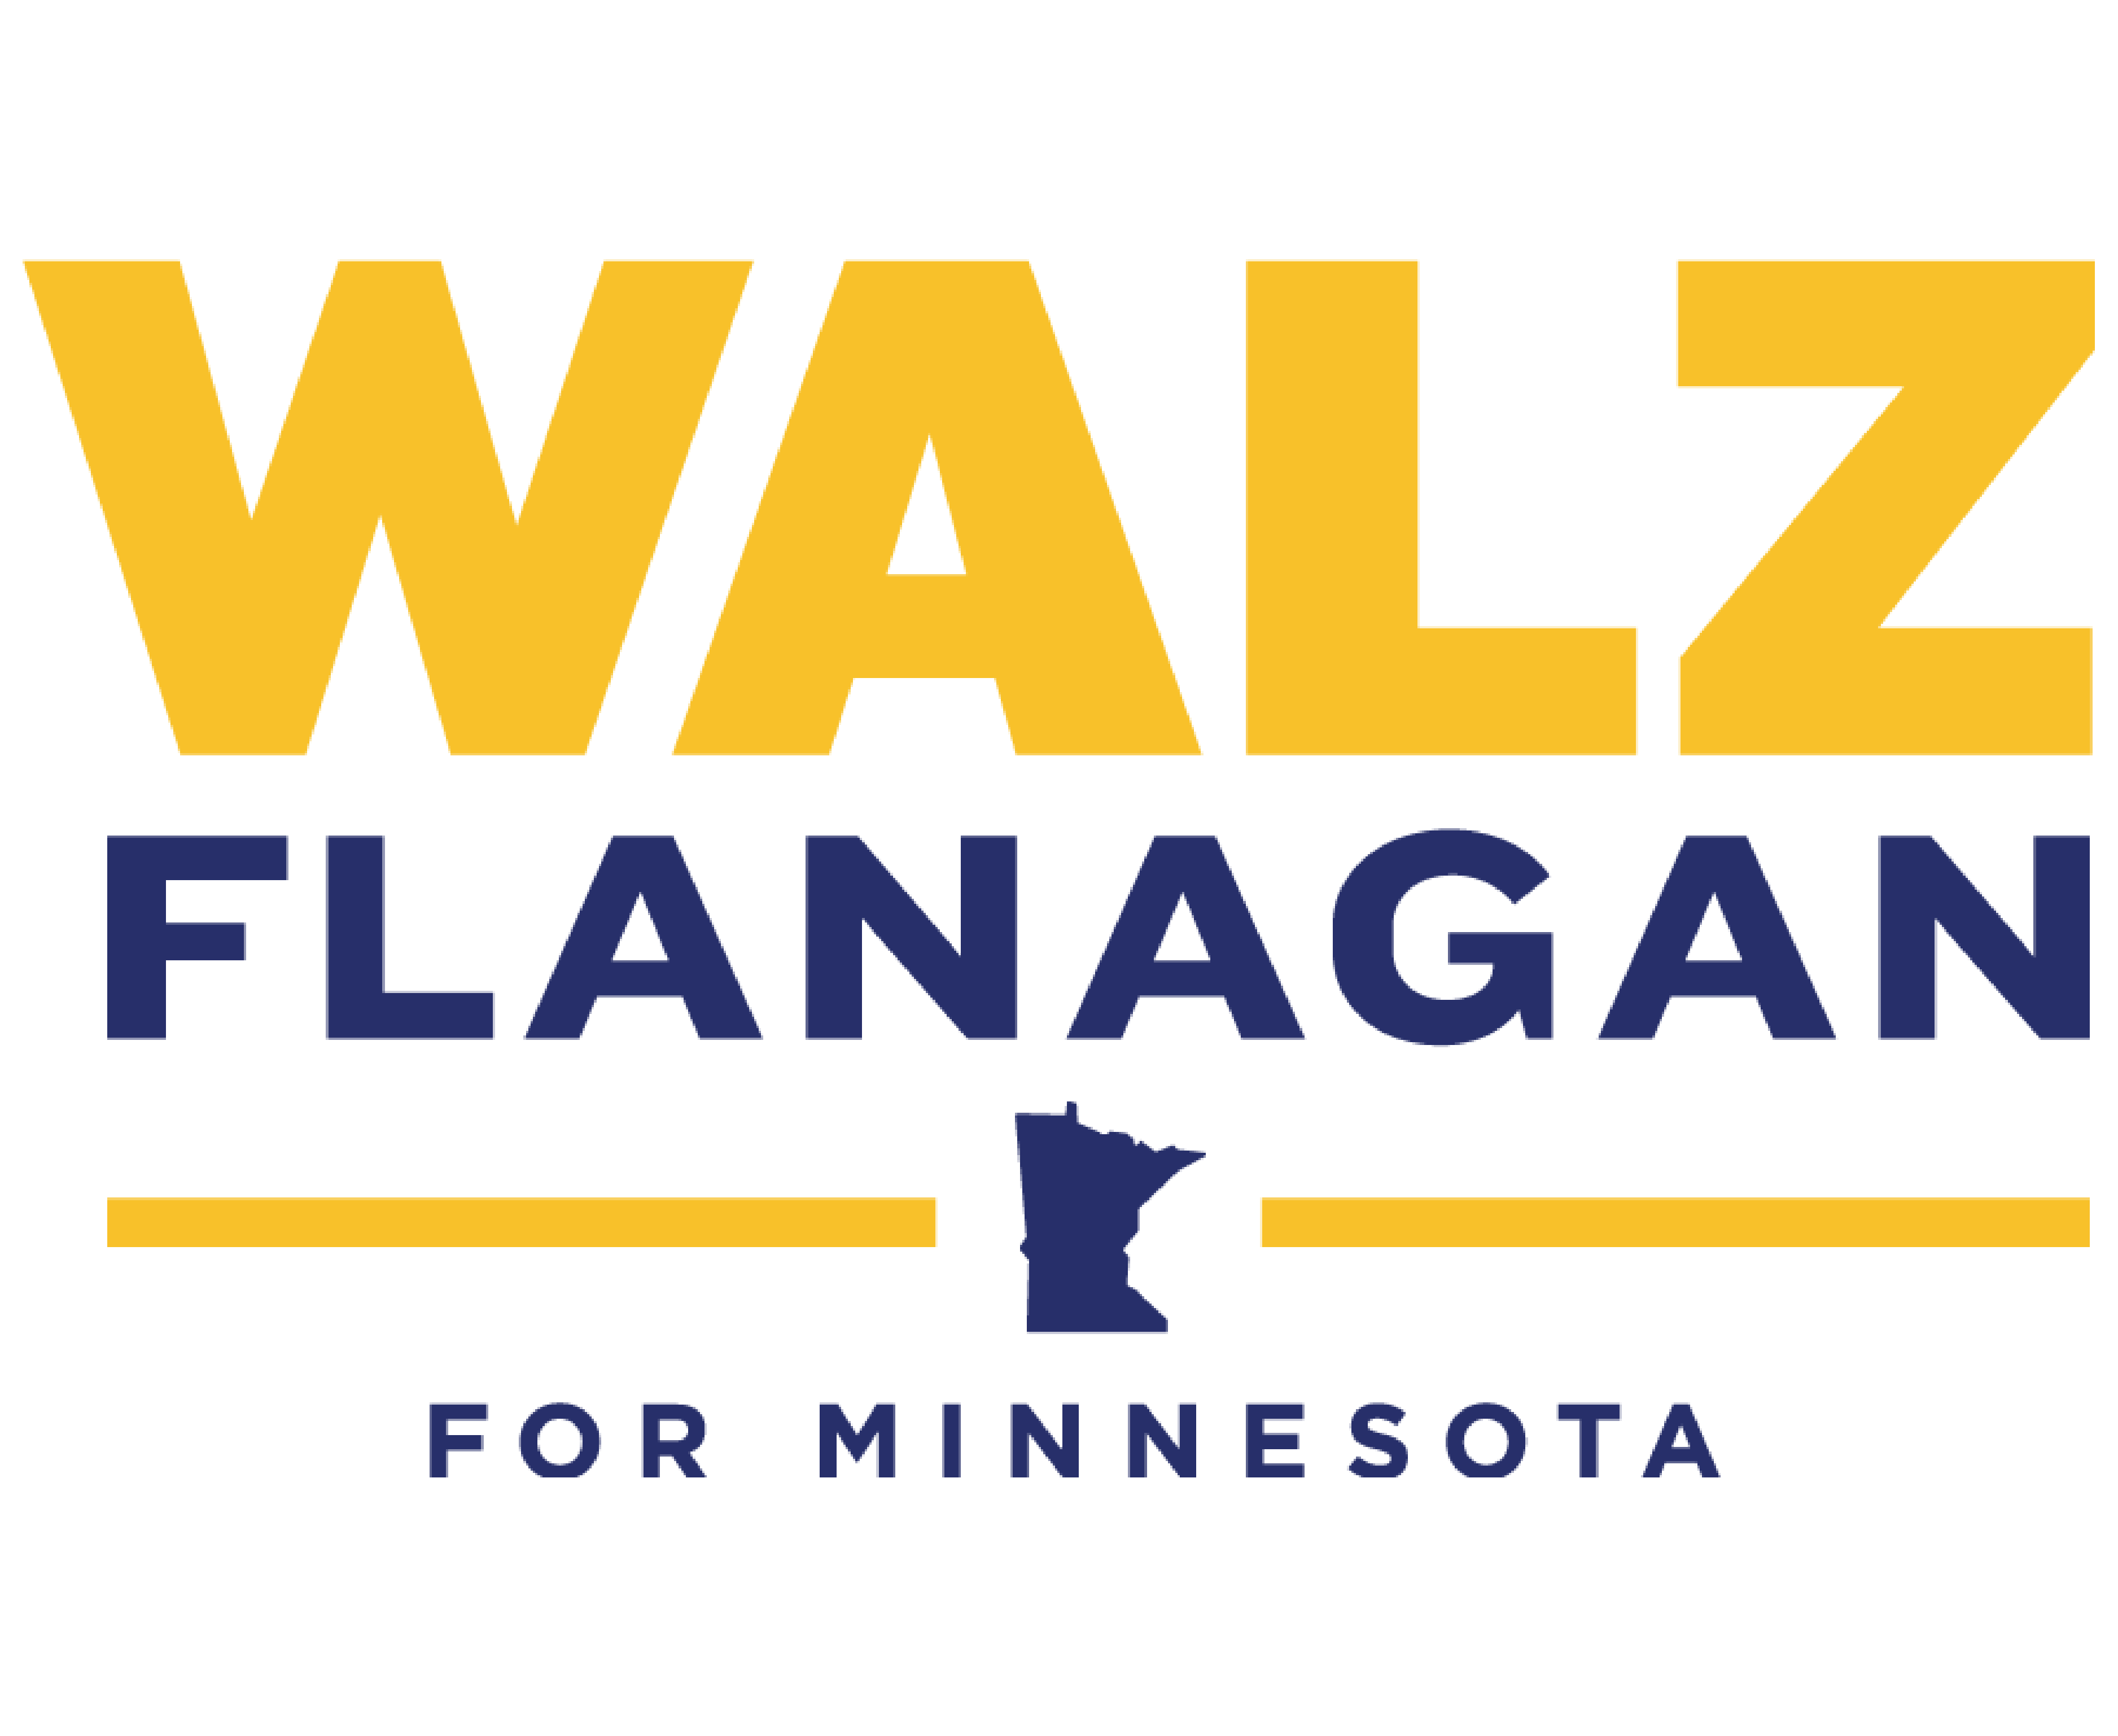 Flanagan Logo - Meet Tim Walz – DFL candidate for Governor of Minnesota